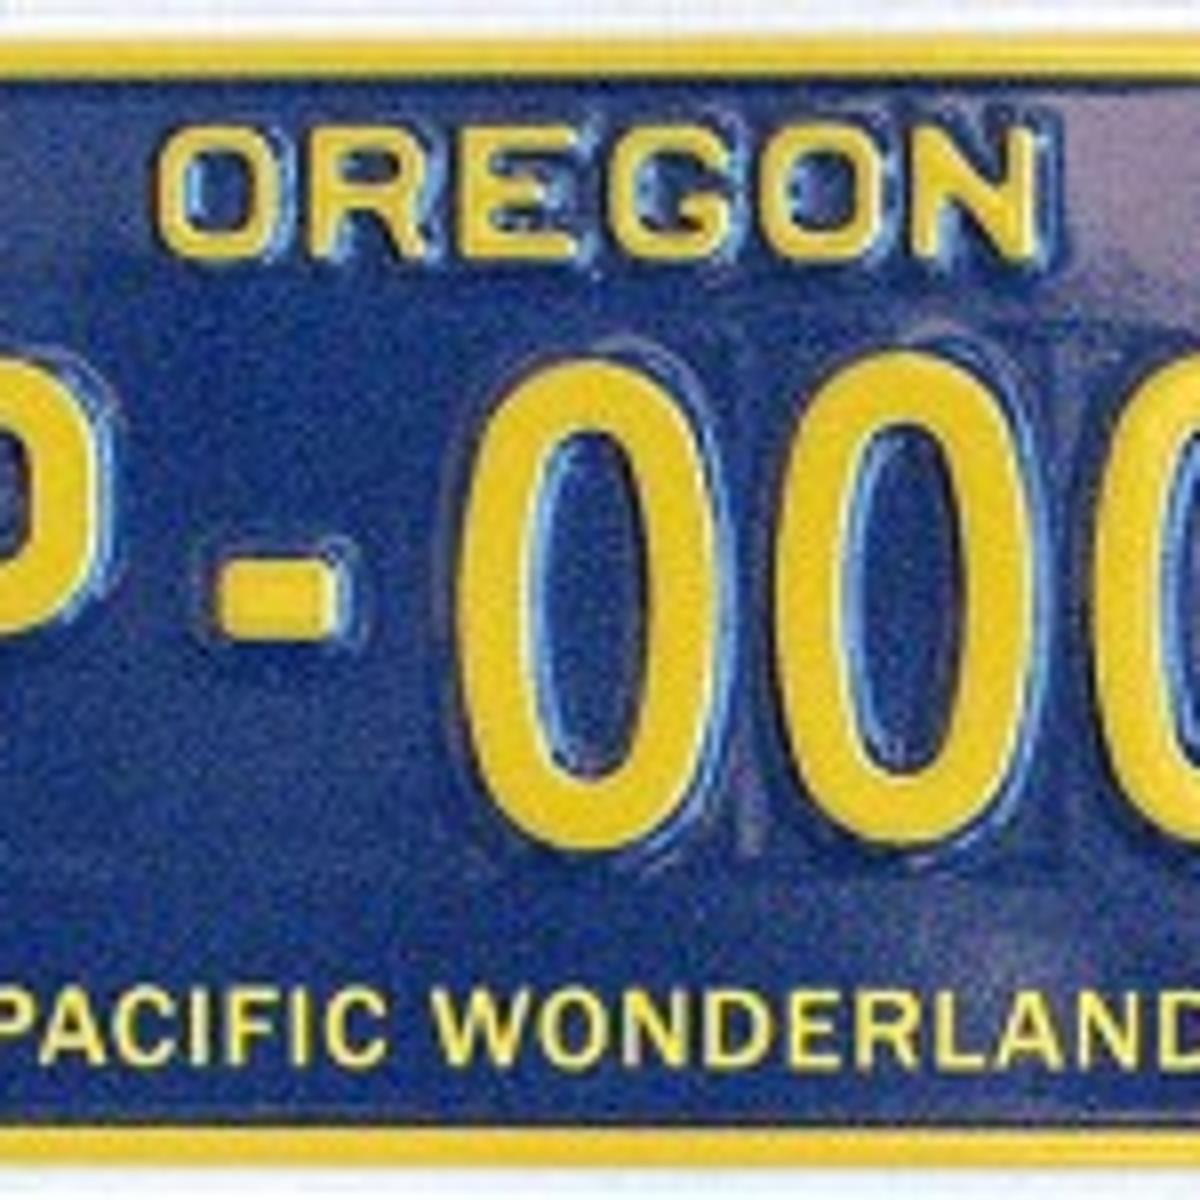 Dmv Deja Vu Pacific Wonderland License Plate Available Local Democratherald Com